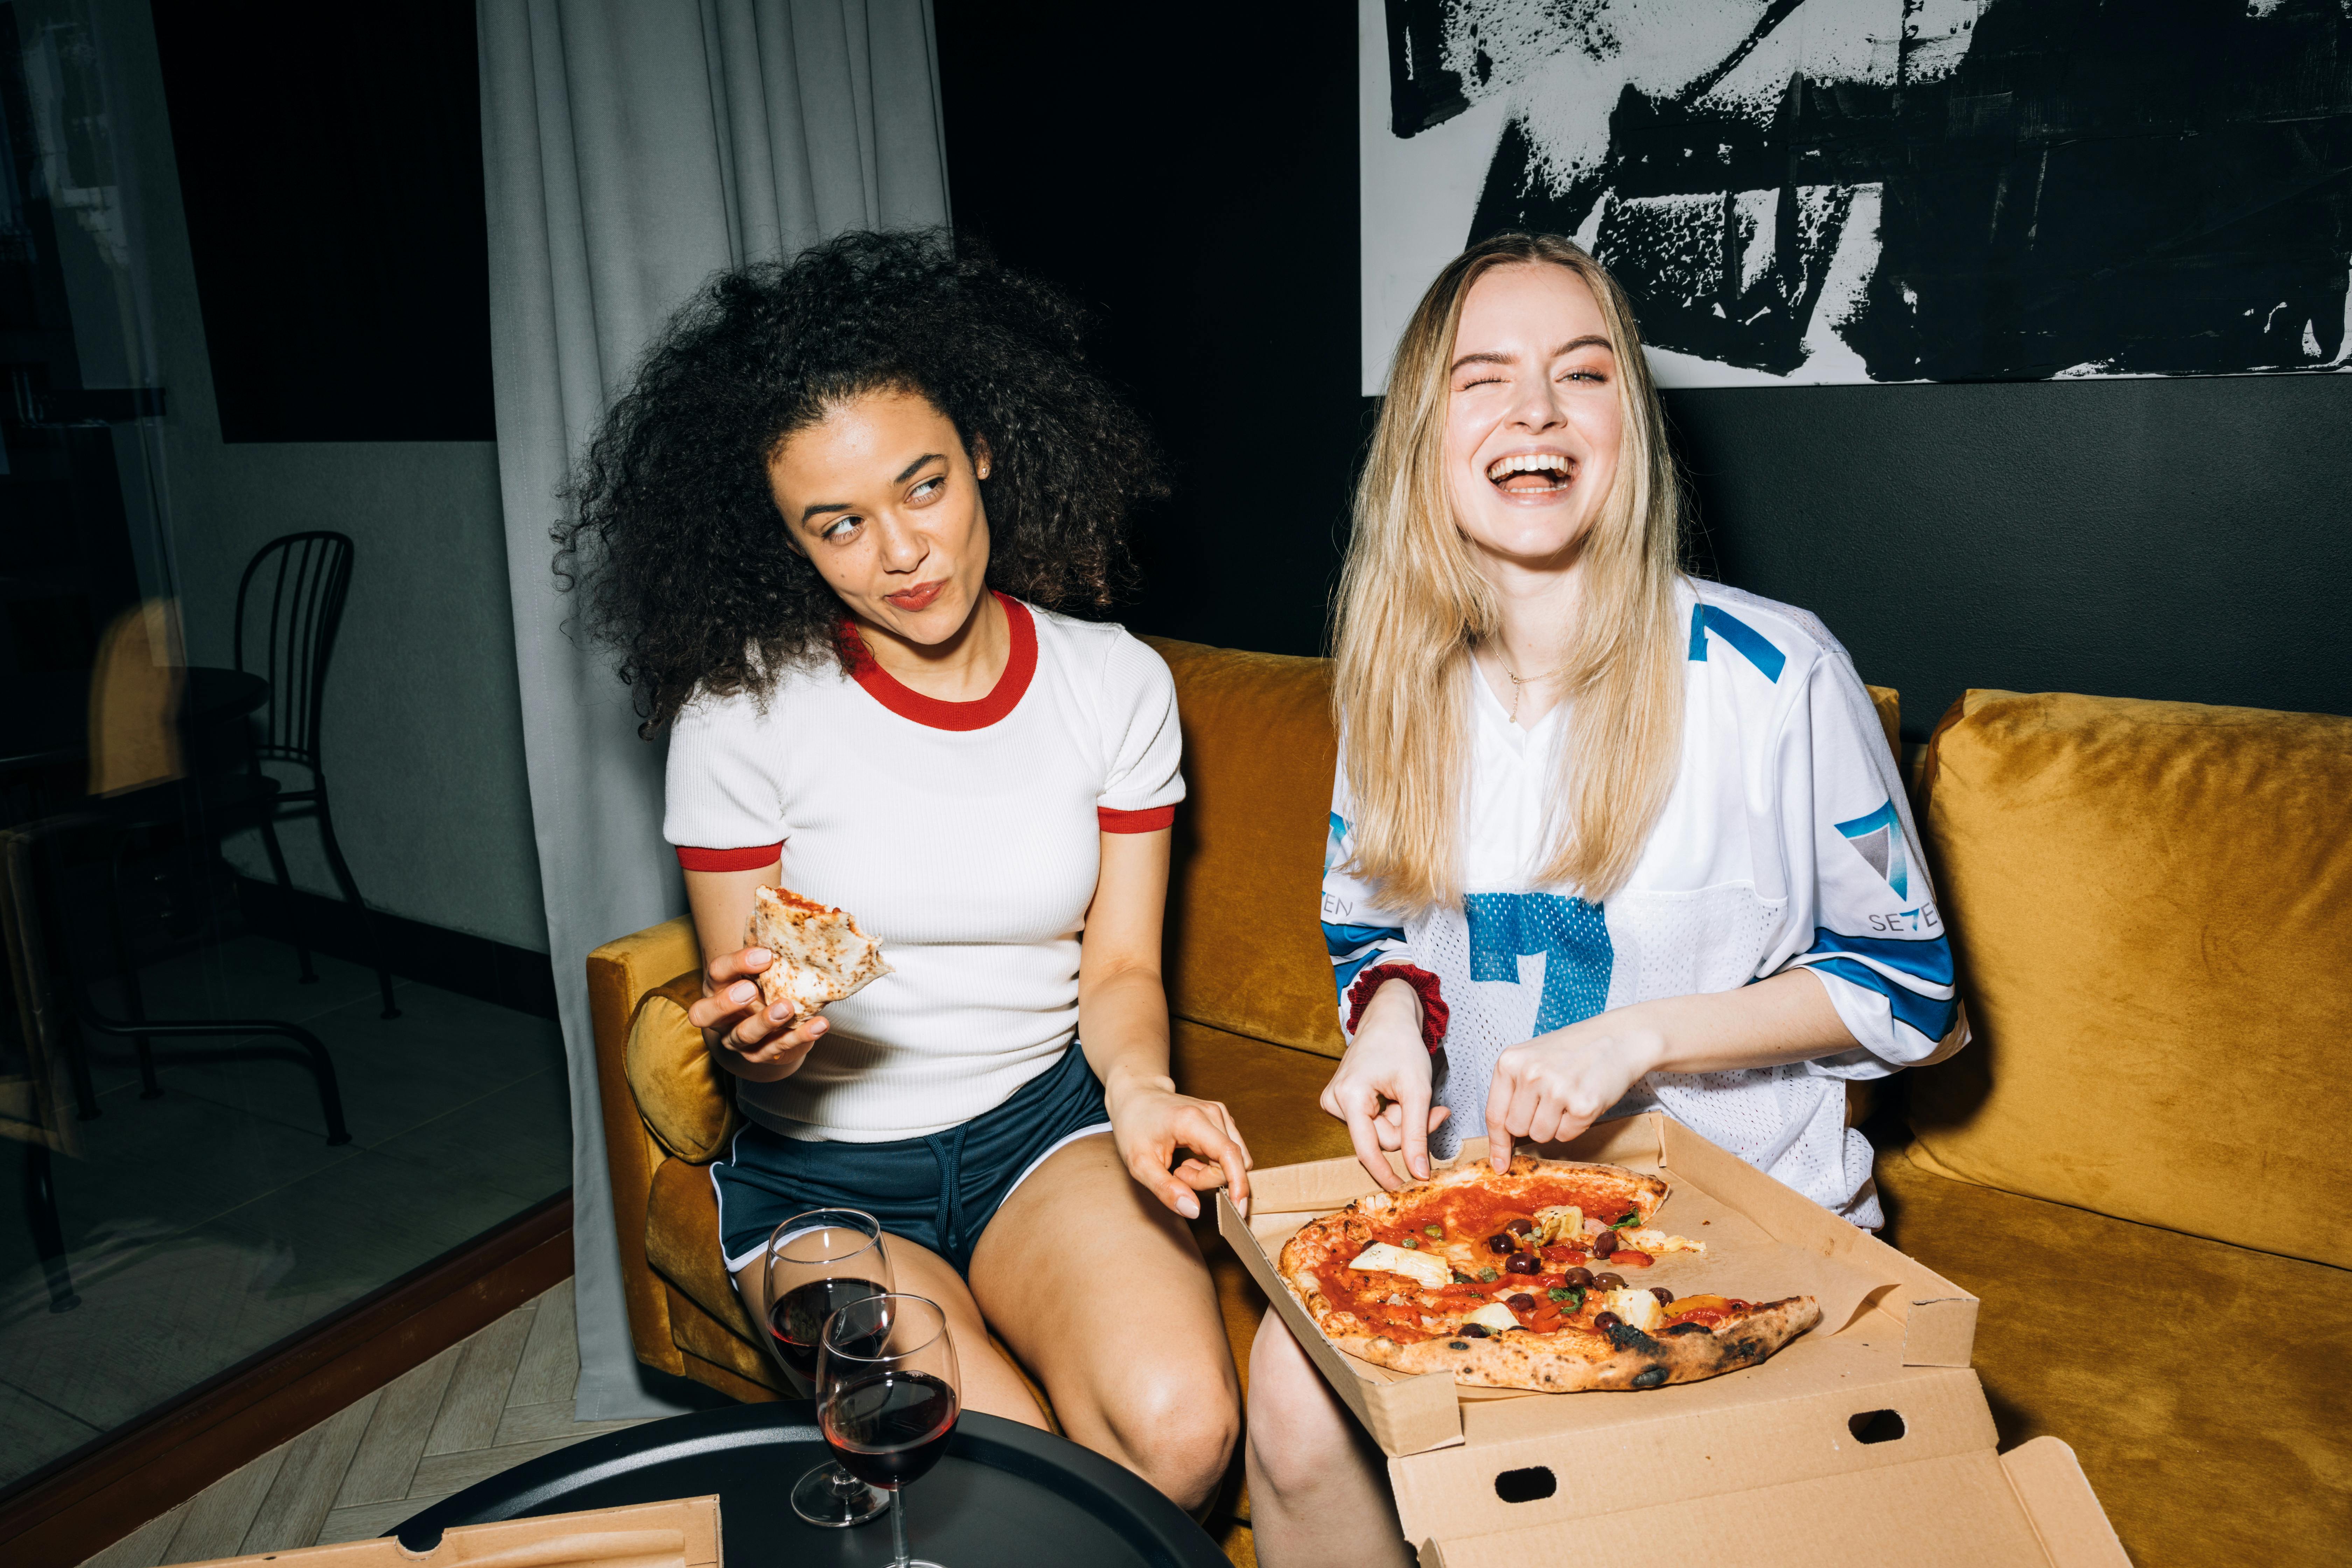 Two girls enjoying pizza | Source: Pexels